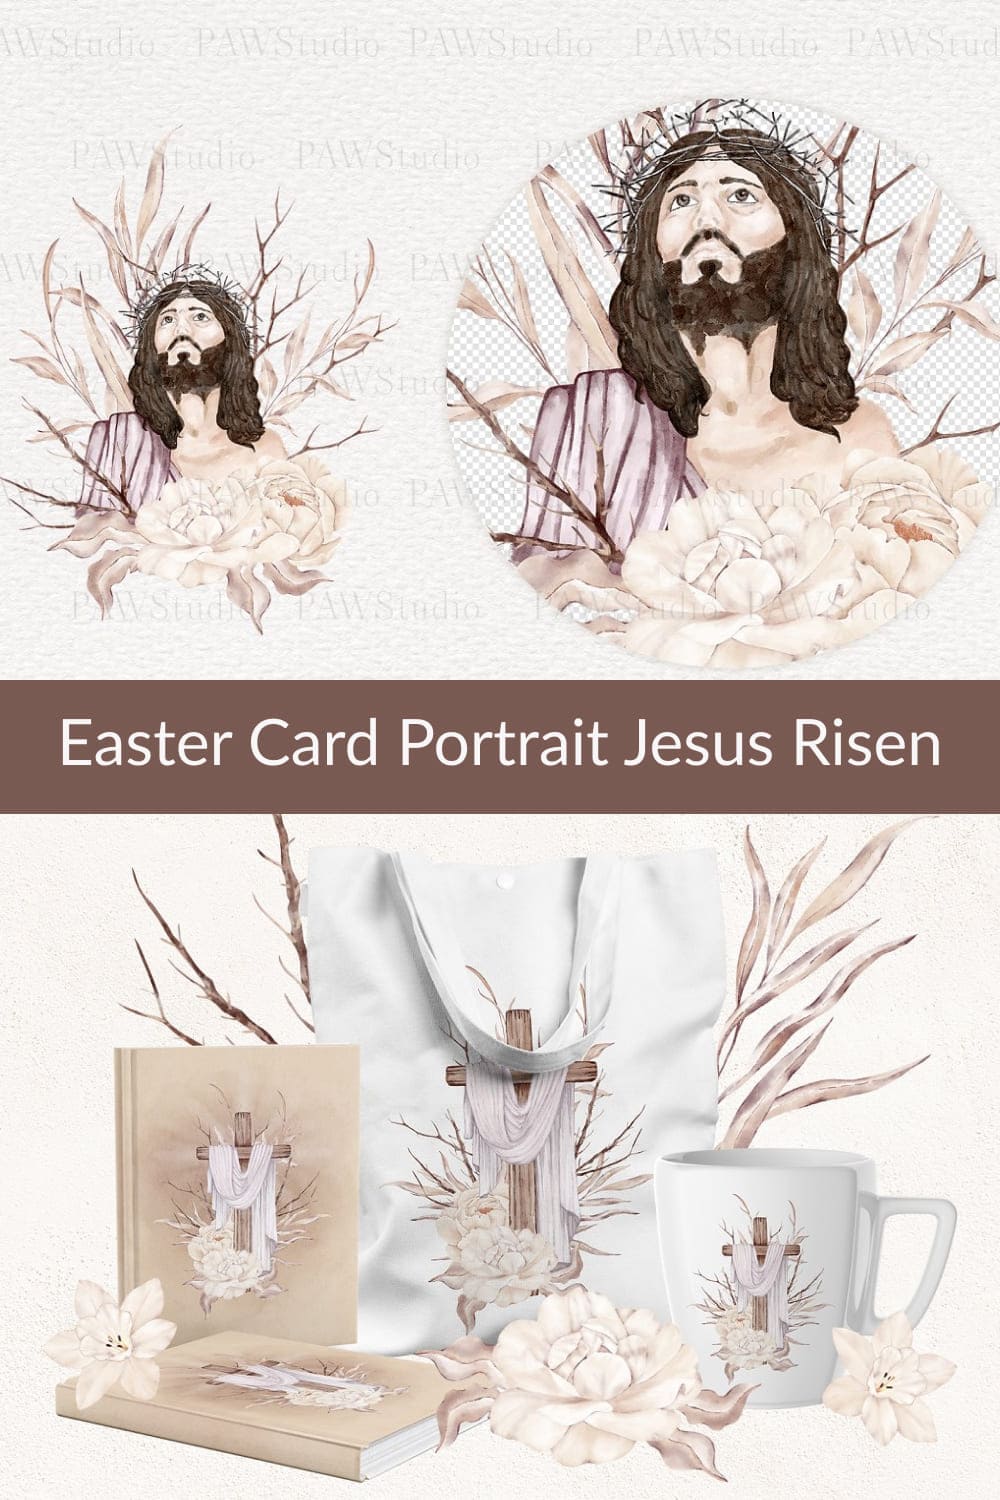 Easter Card Portrait Jesus Risen - pinterest image preview.